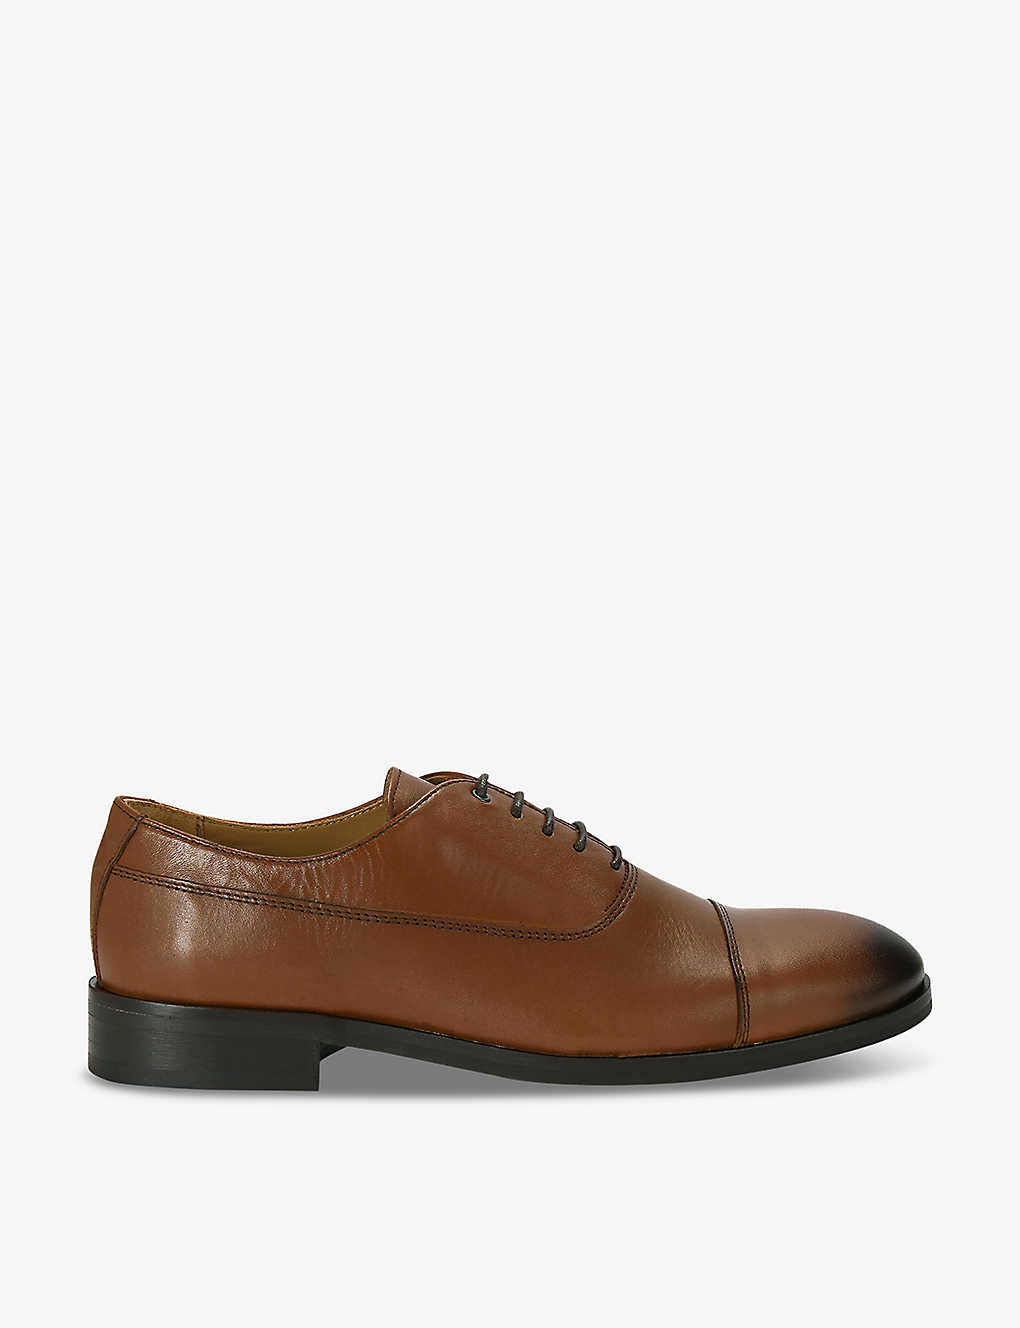 Kurt Geiger London Mens Tan Hunter Oxford Lace-up Leather Shoes